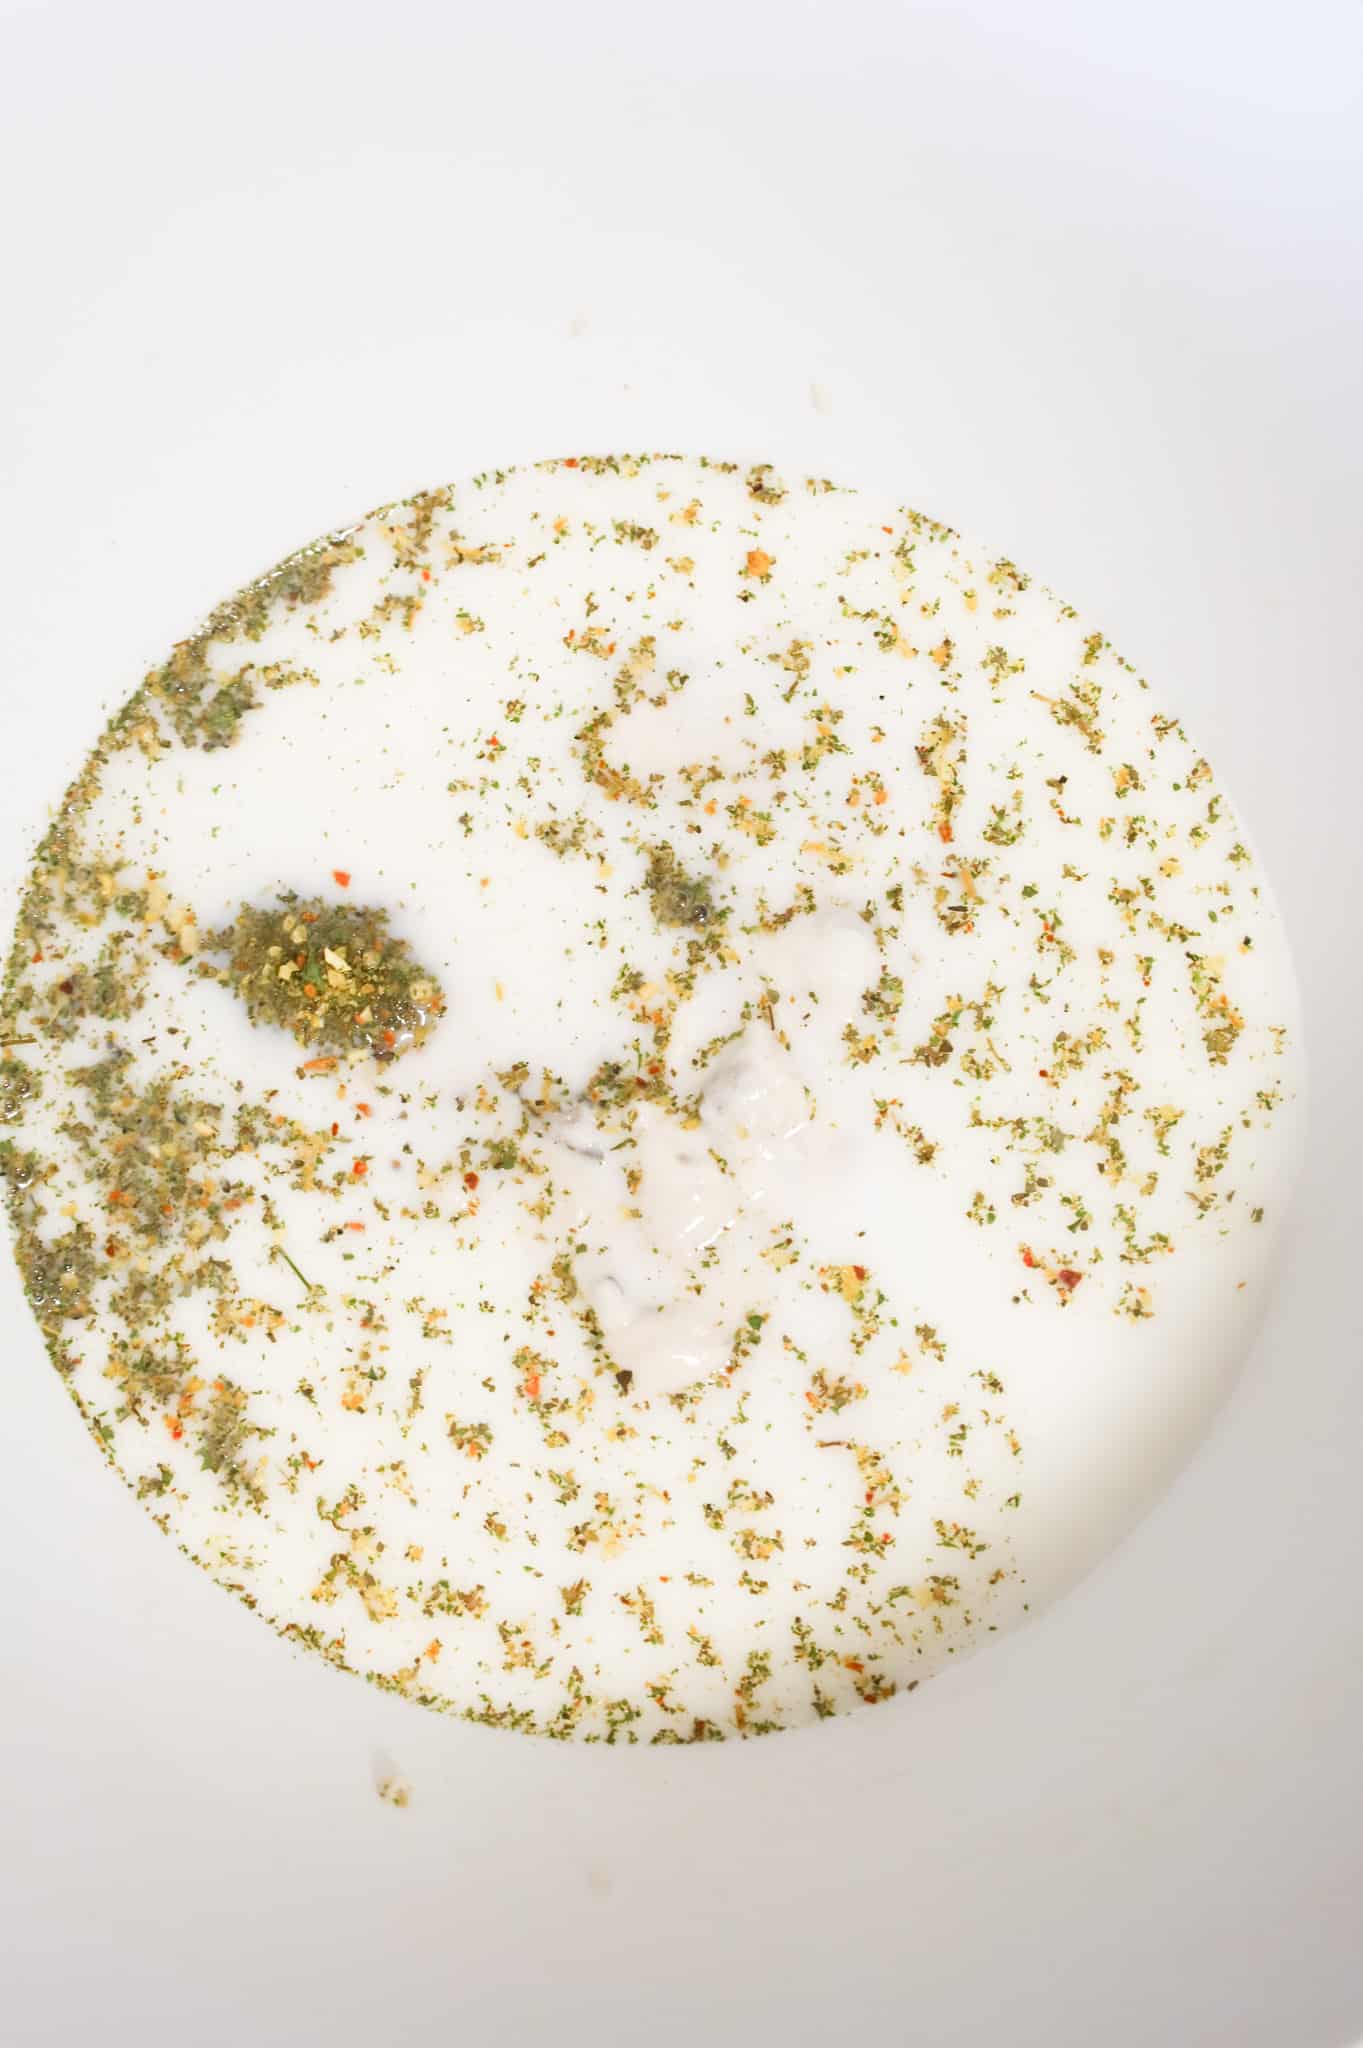 Italian seasoning, milk, water and cream of mushroom soup in a mixing bowl